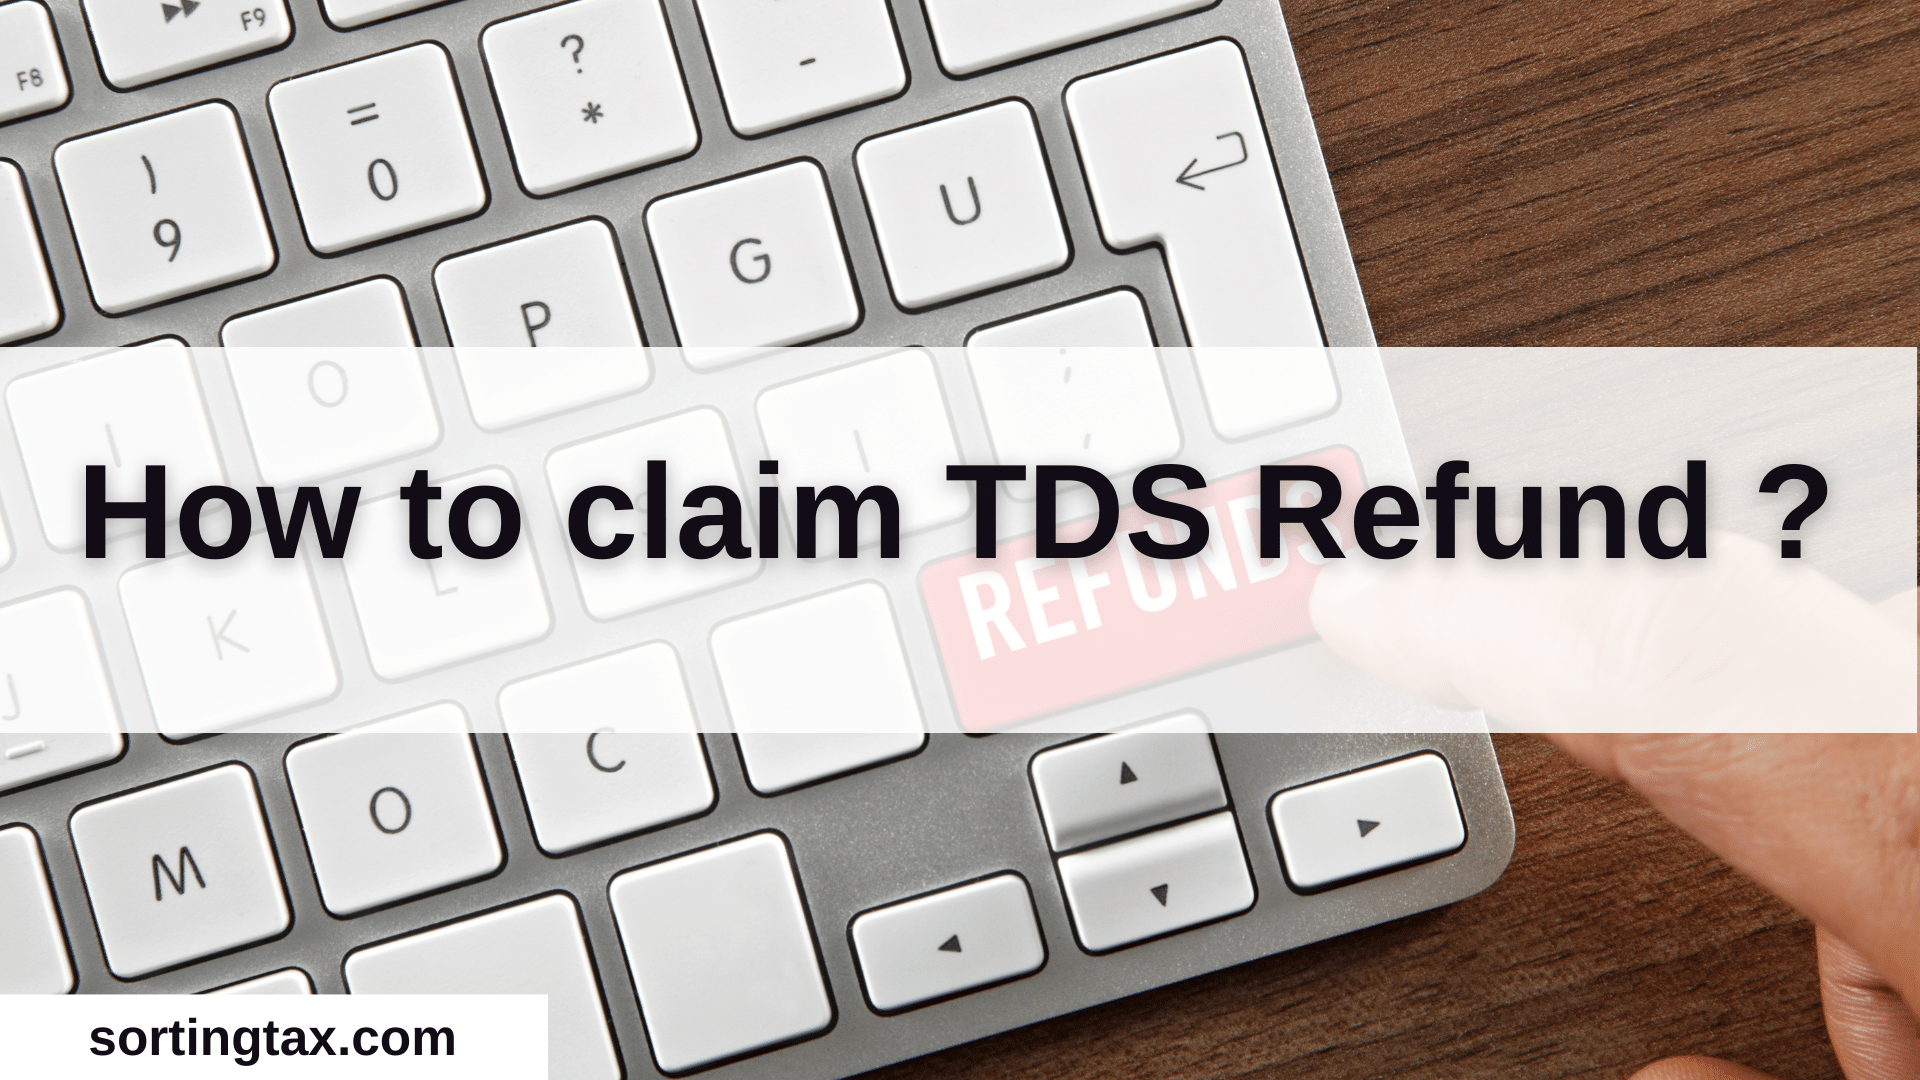 How to claim TDS Refund